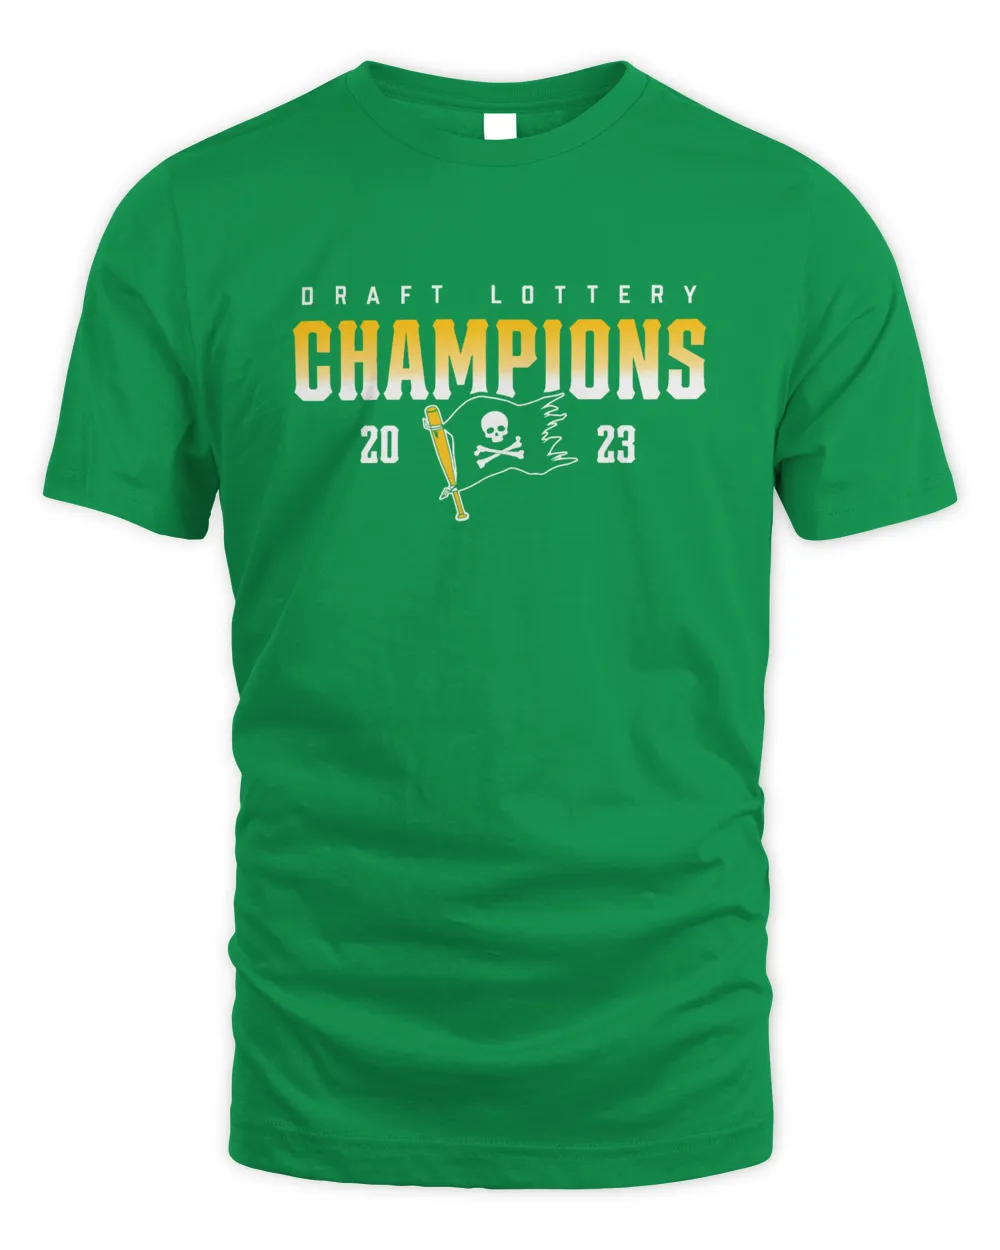 Draft Lottery Champions 2023 Tee Shirt